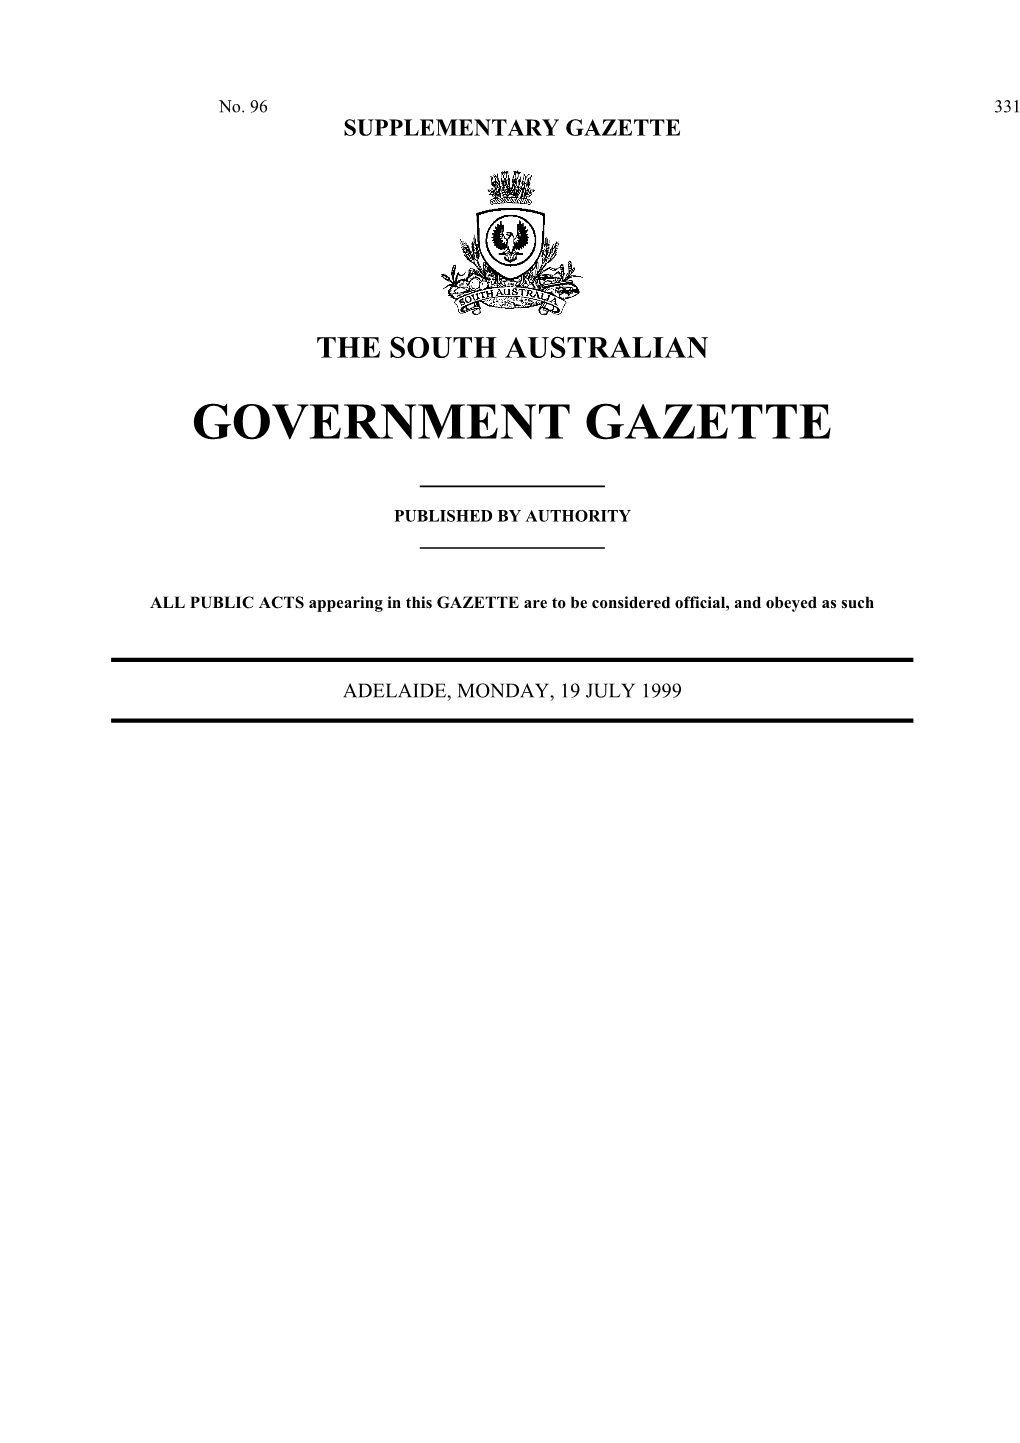 Supplementary Gazette